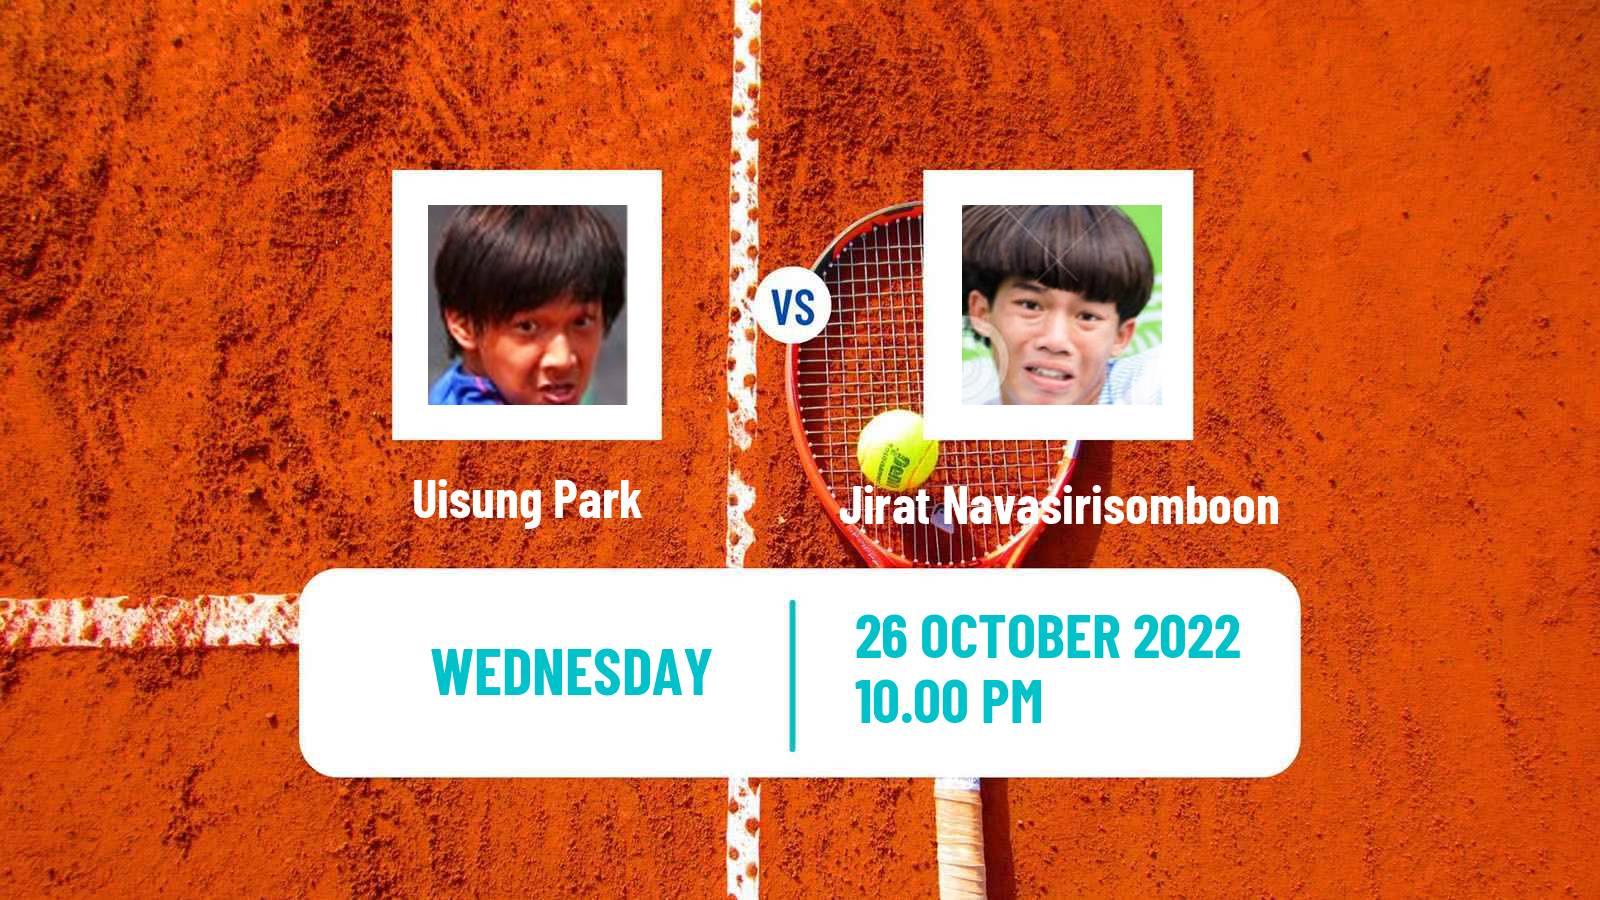 Tennis ITF Tournaments Uisung Park - Jirat Navasirisomboon